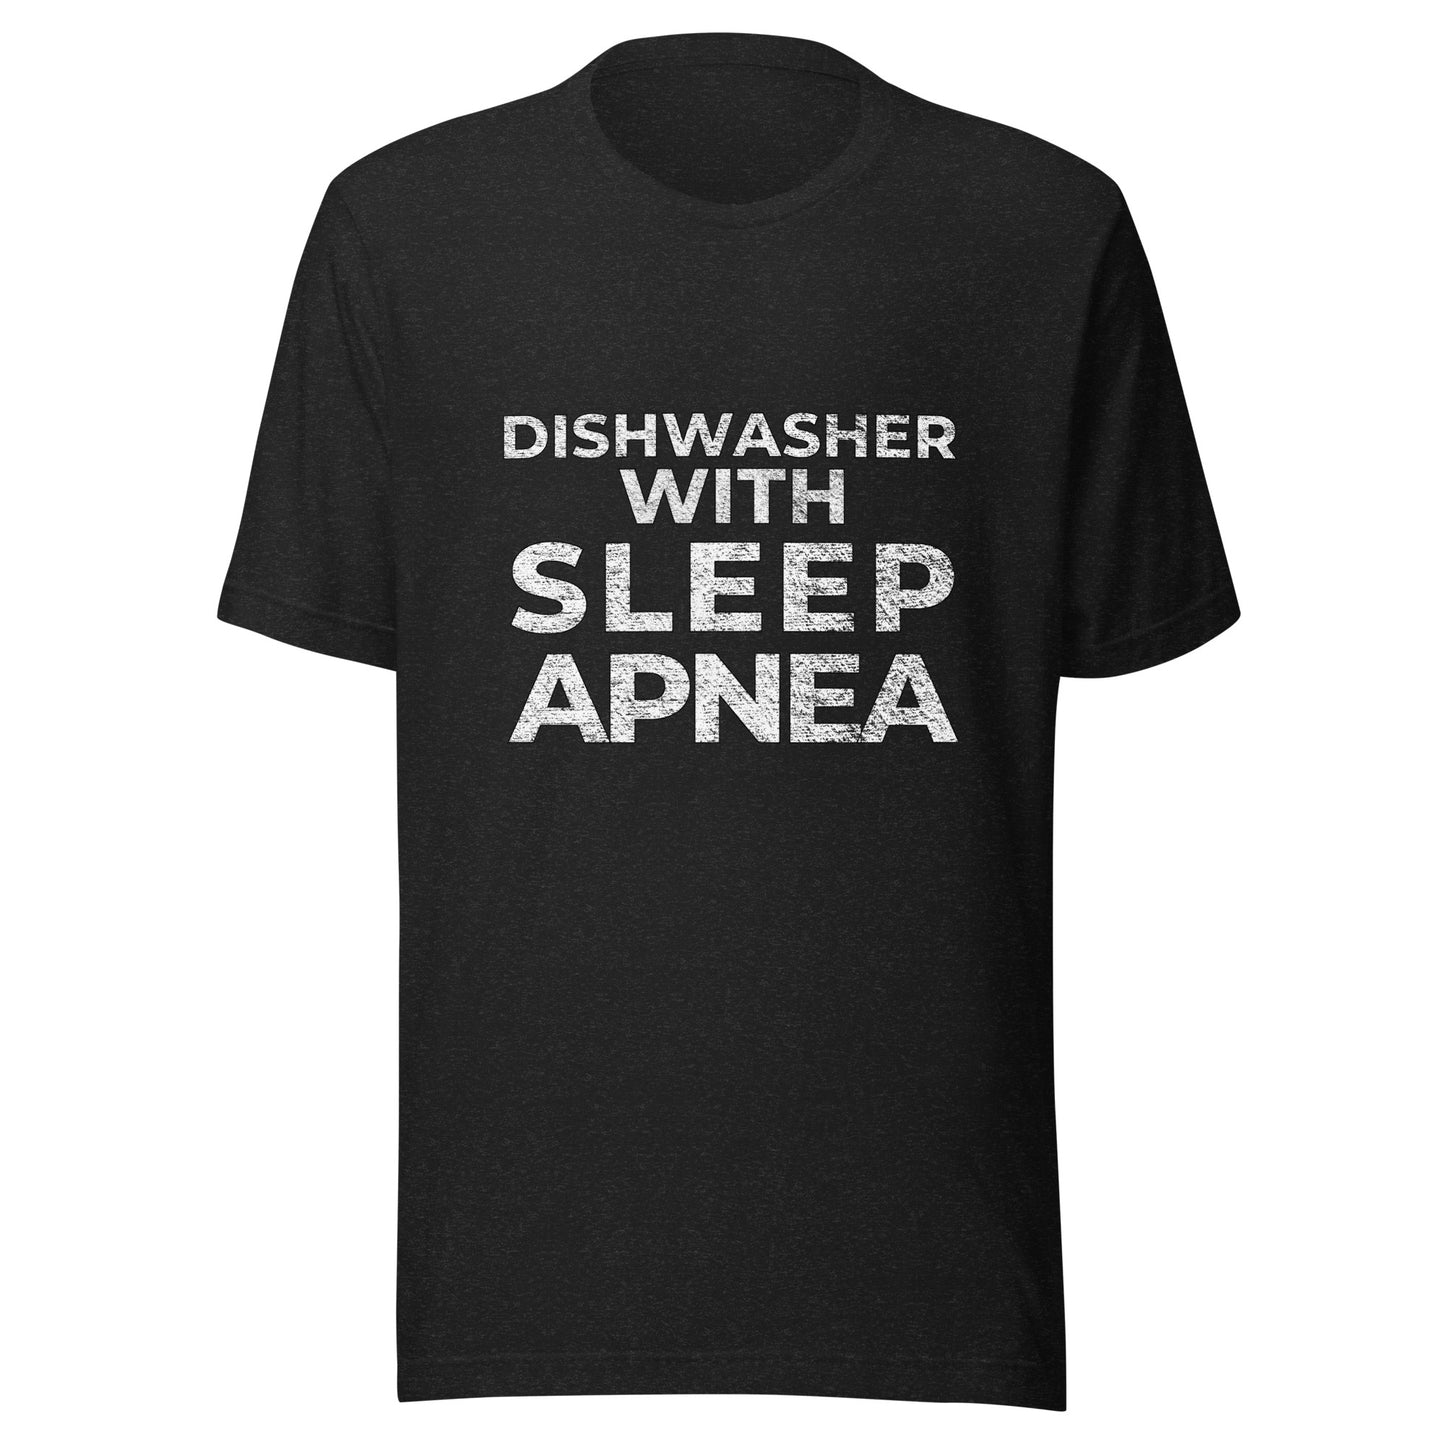 Dishwasher With Sleep Apnea, Graphic Tee Shirt, Black